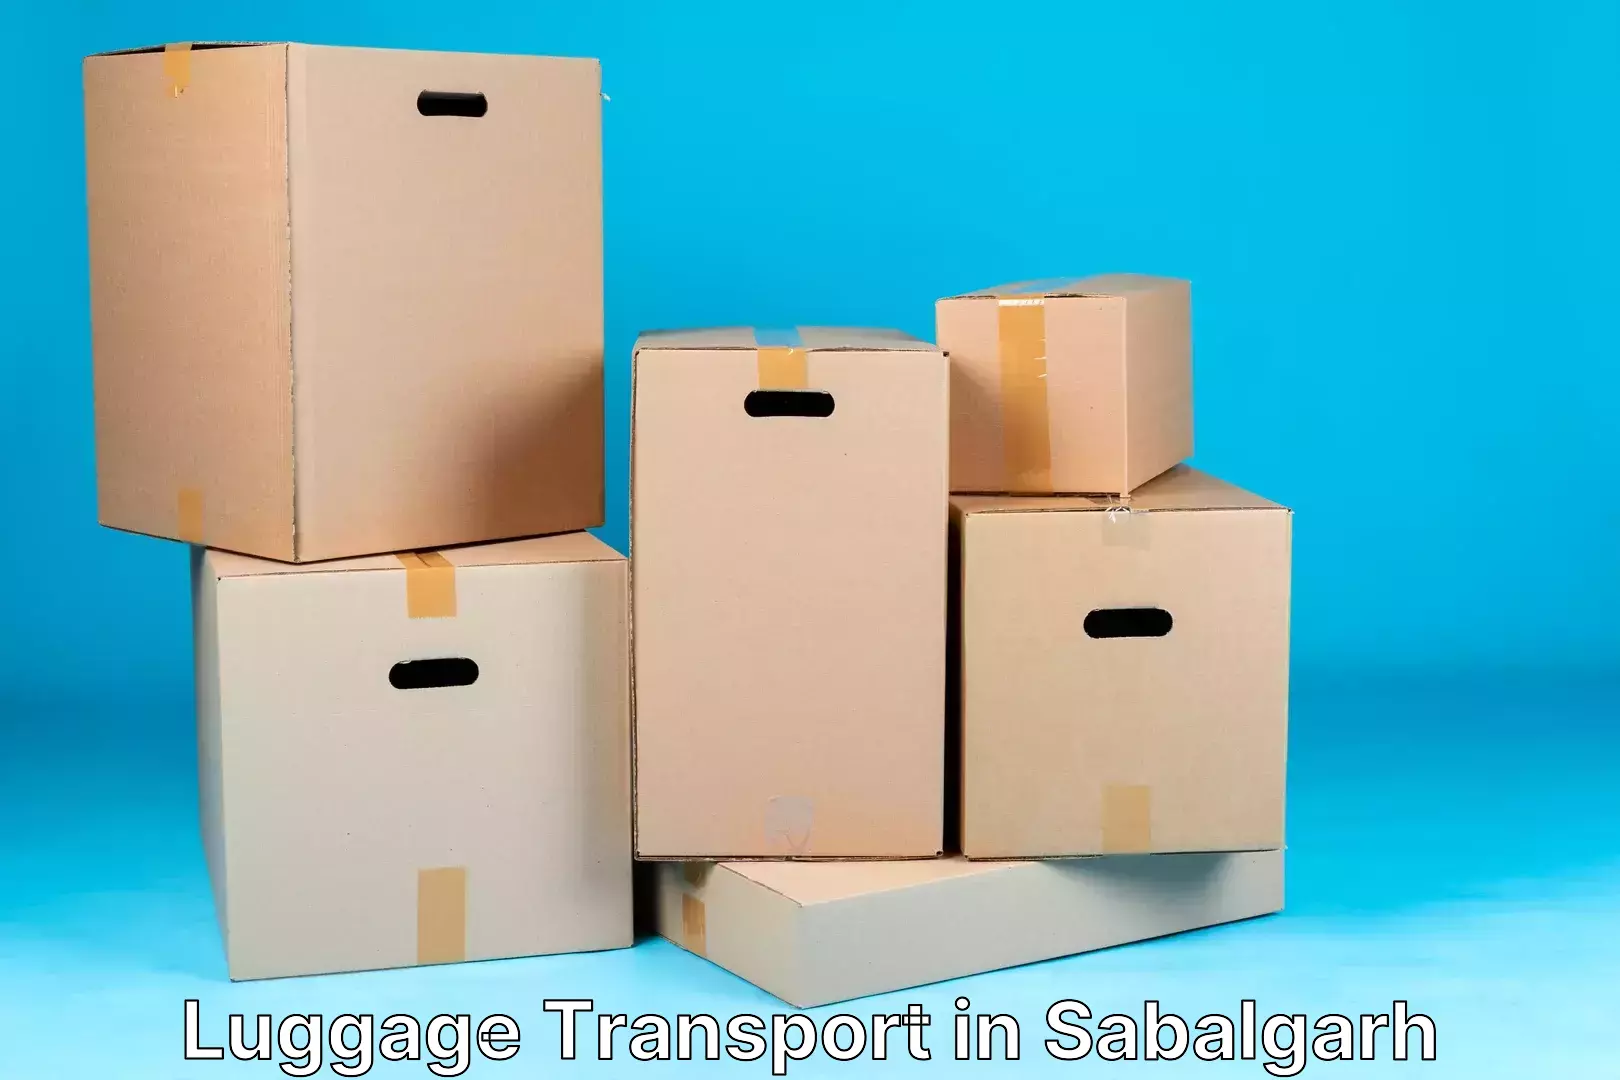 Multi-destination luggage transport in Sabalgarh